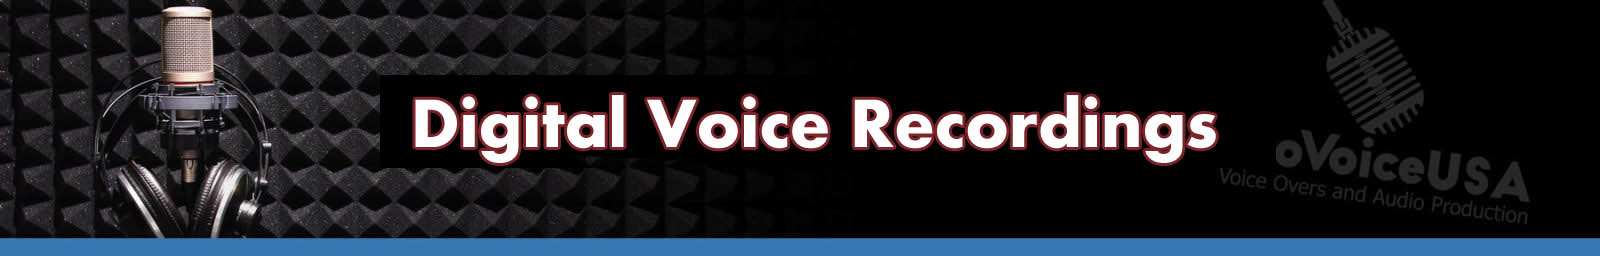 Digital Voice Recordings | American Voice Recording Service | ProVoice USA